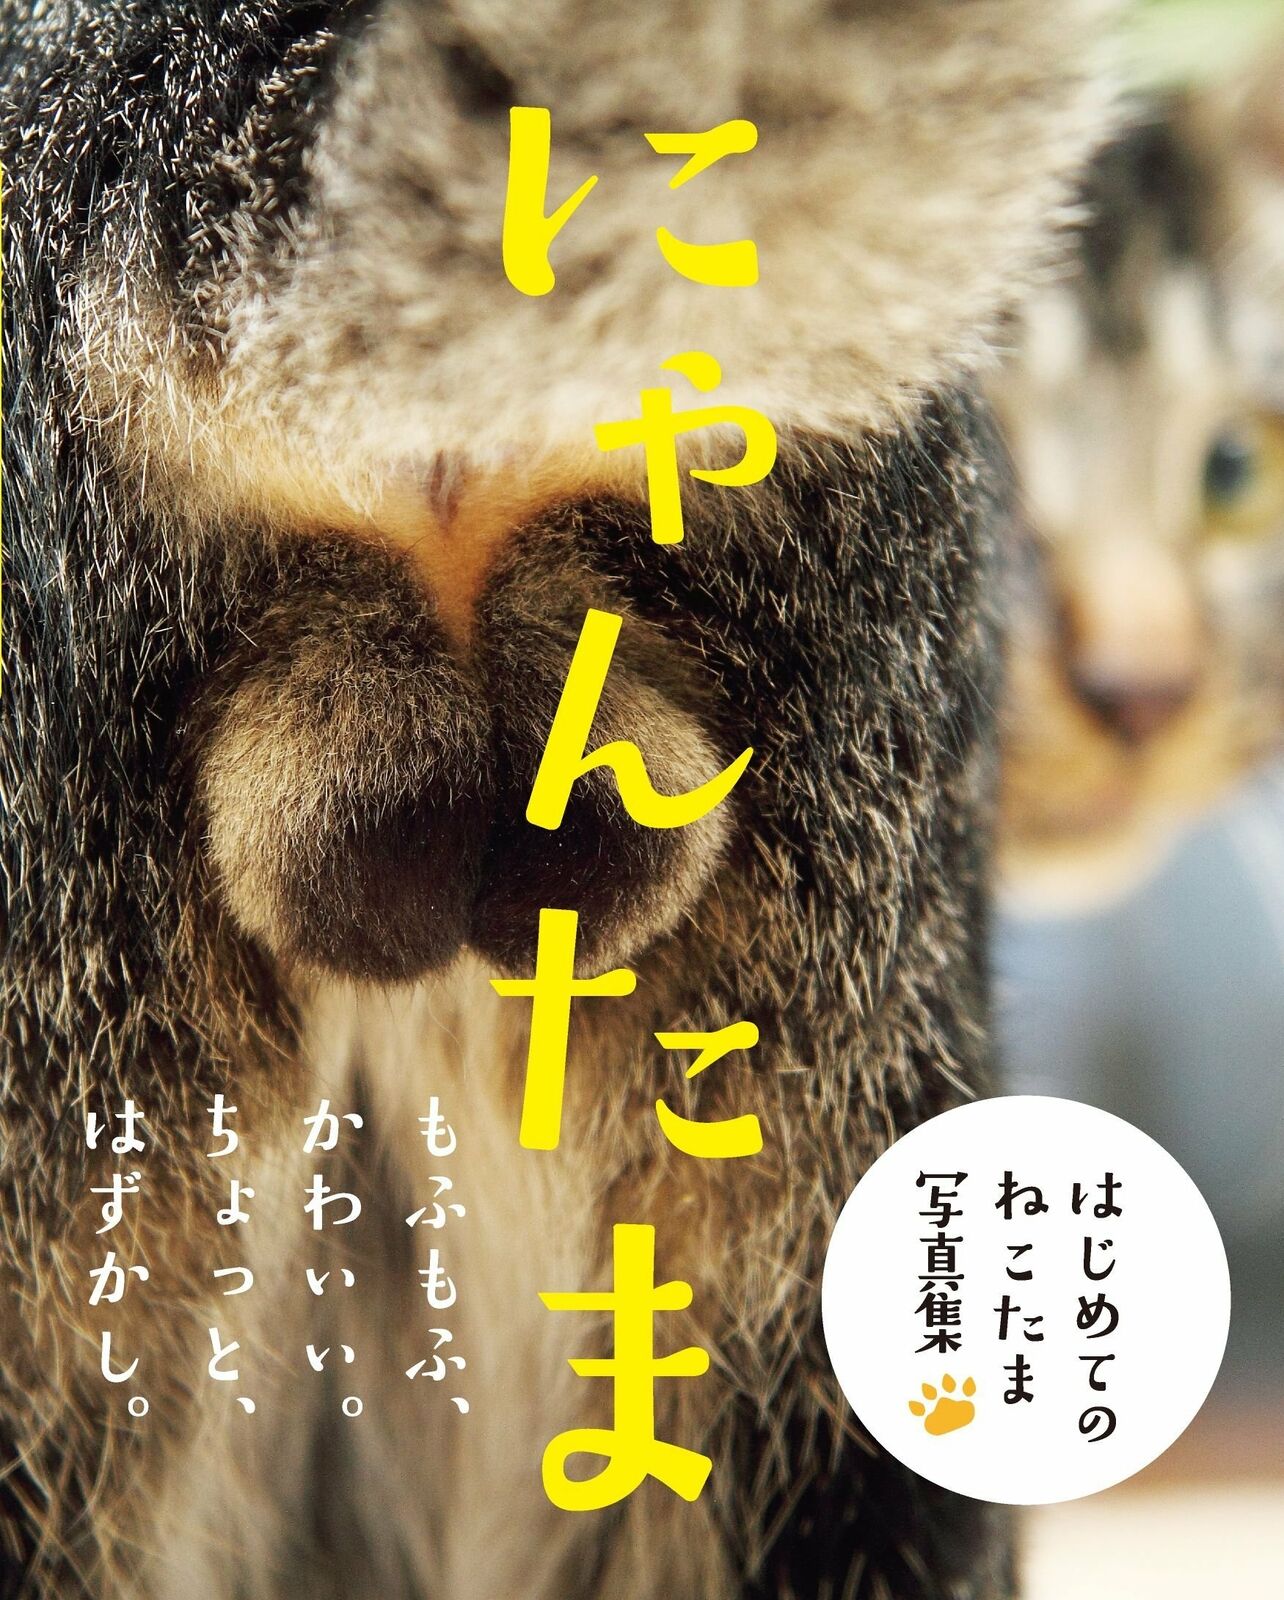 Nyantama Cat Testicles Animal Photo Book album nekotama Japan